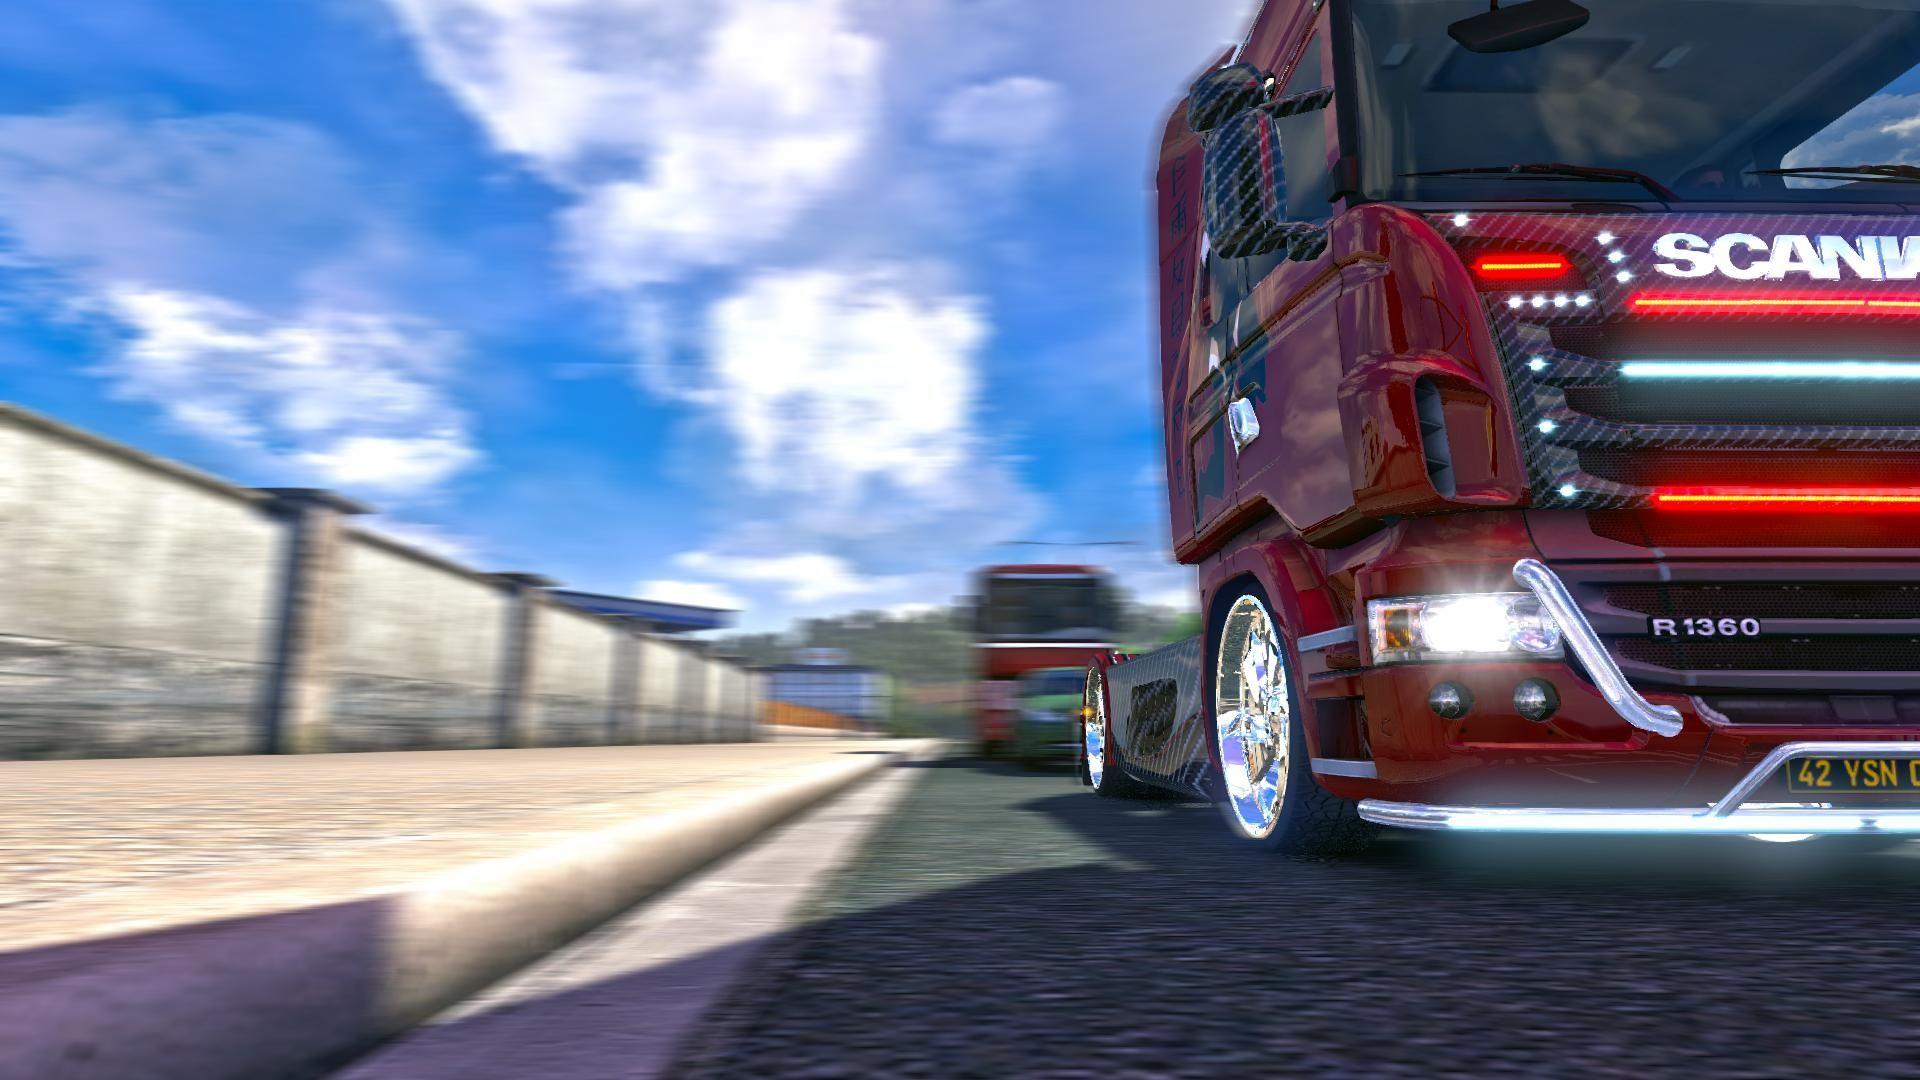 Euro Truck Simulator 2 Wallpapers Top Free Euro Truck Simulator 2 Backgrounds Wallpaperaccess